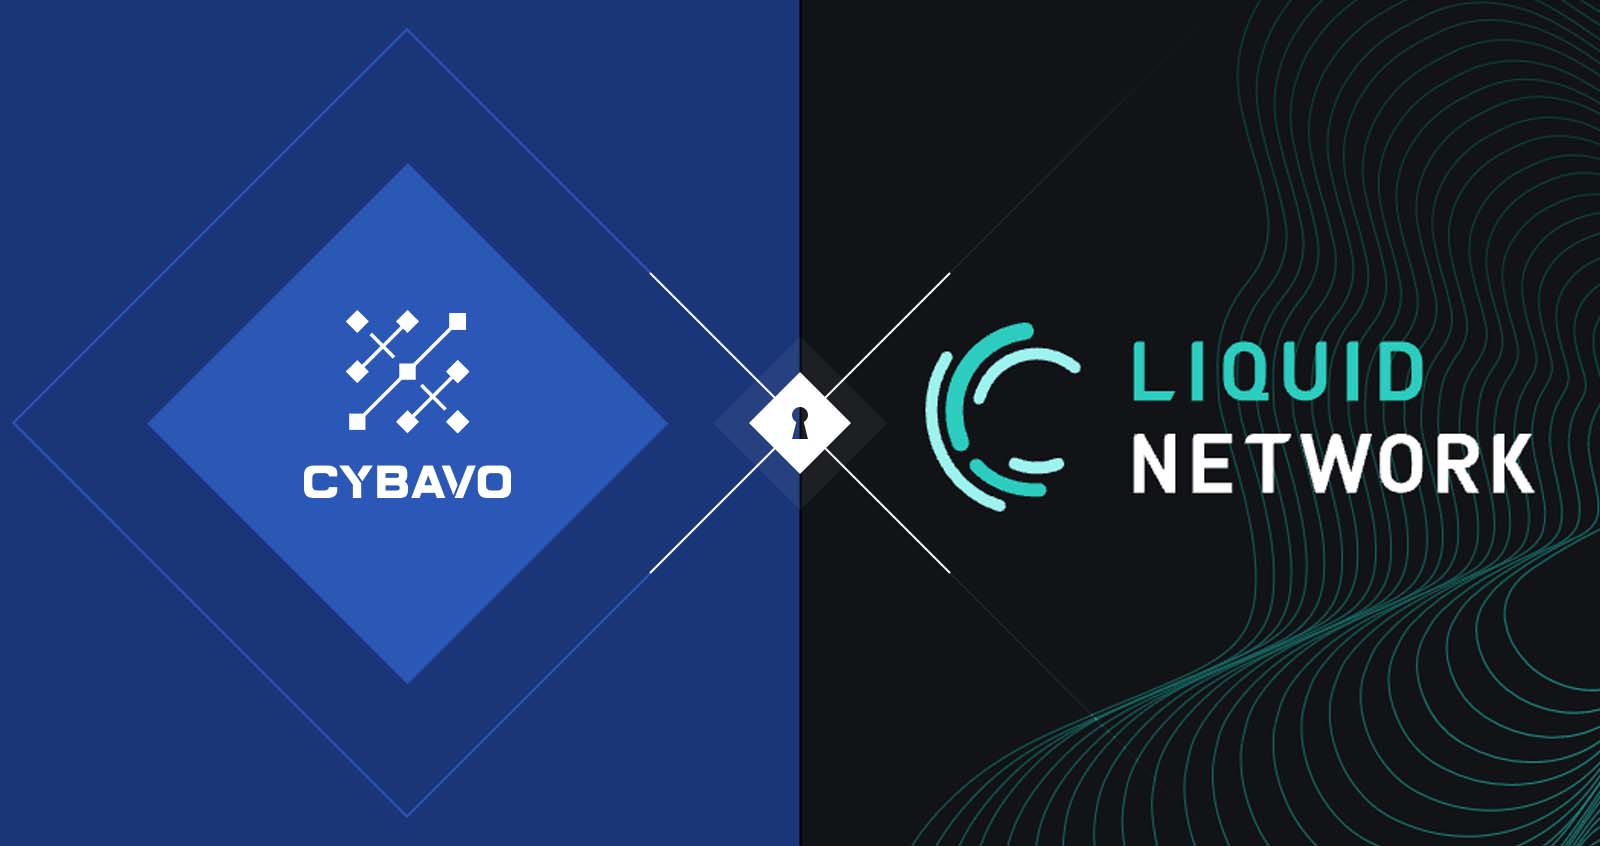 cybavo-supports-liquid-network-banner